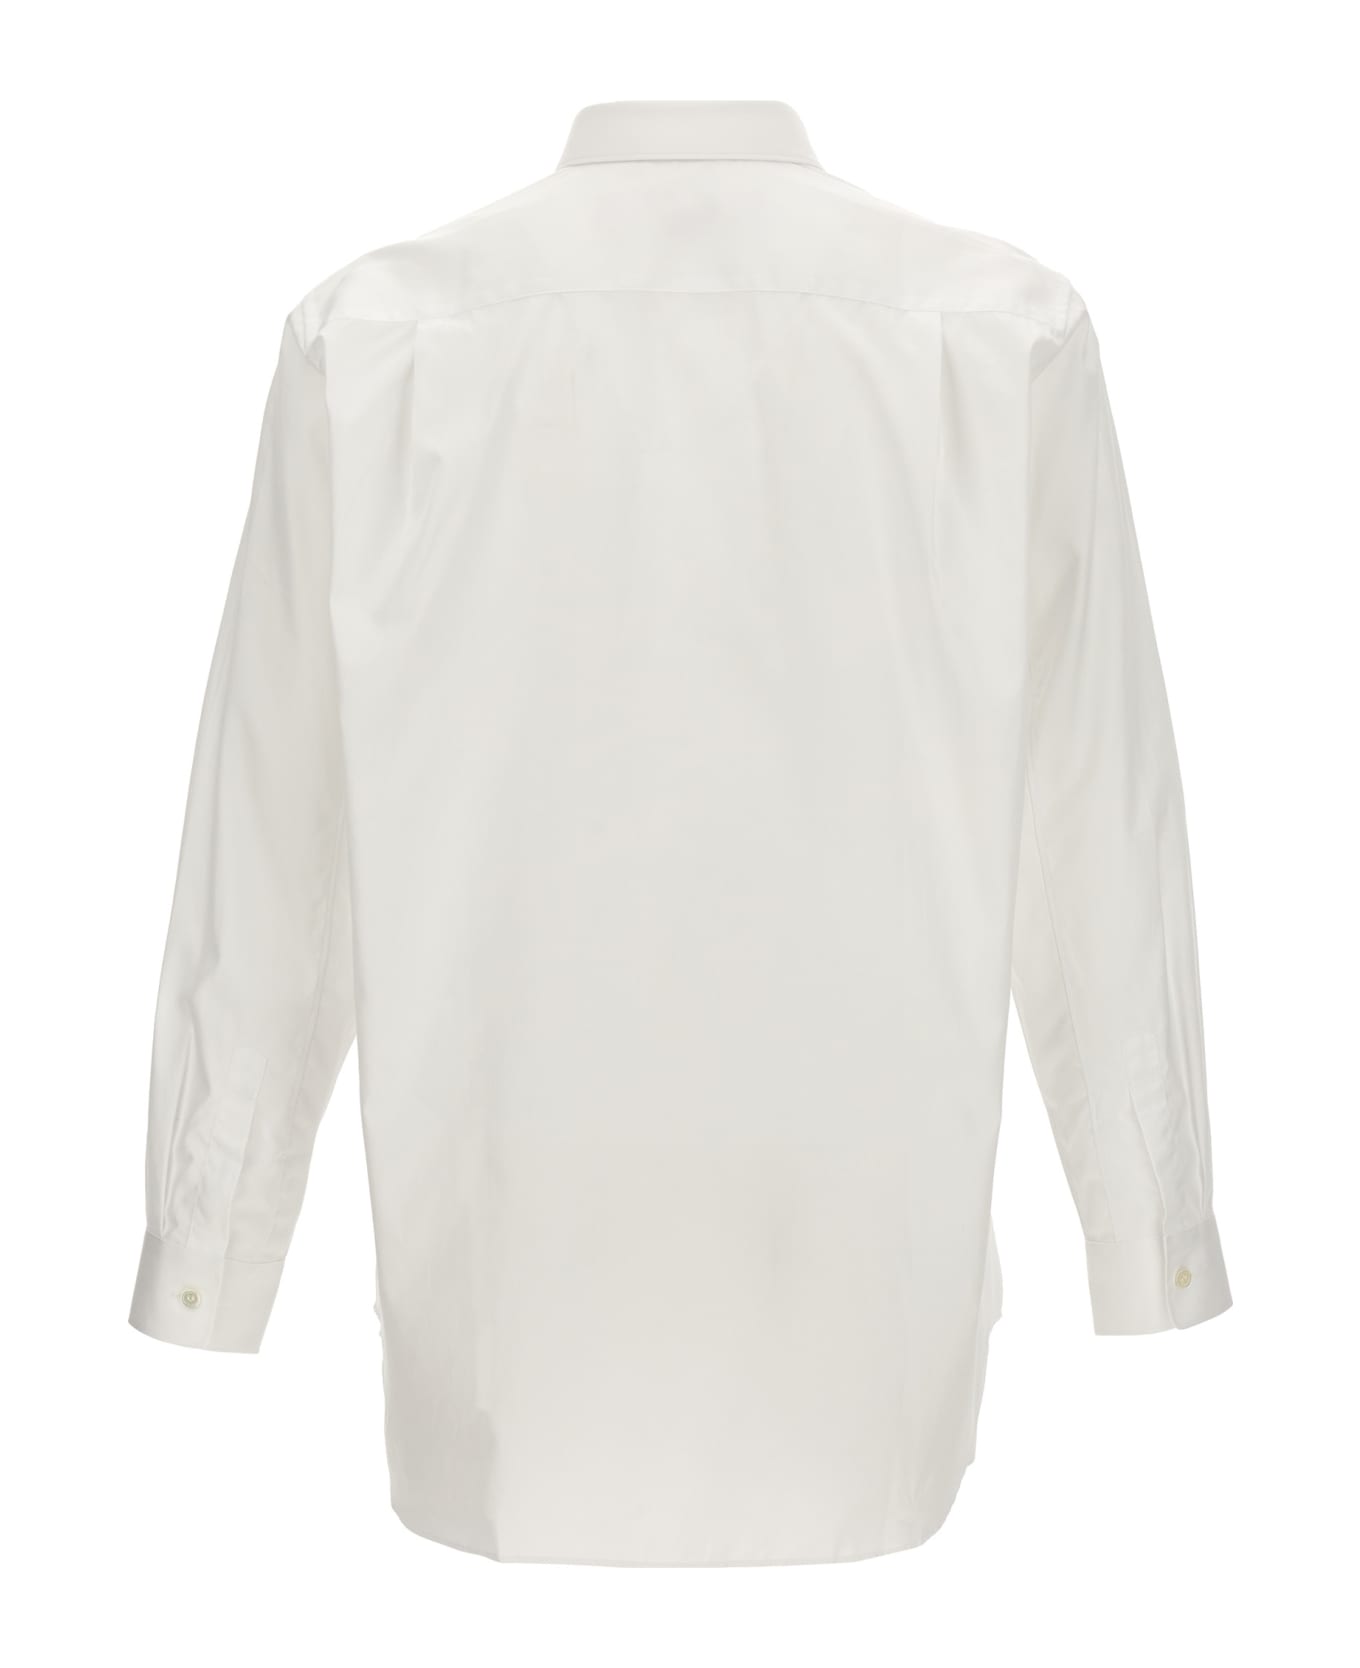 Comme des Garçons Play Logo Patch Shirt - White